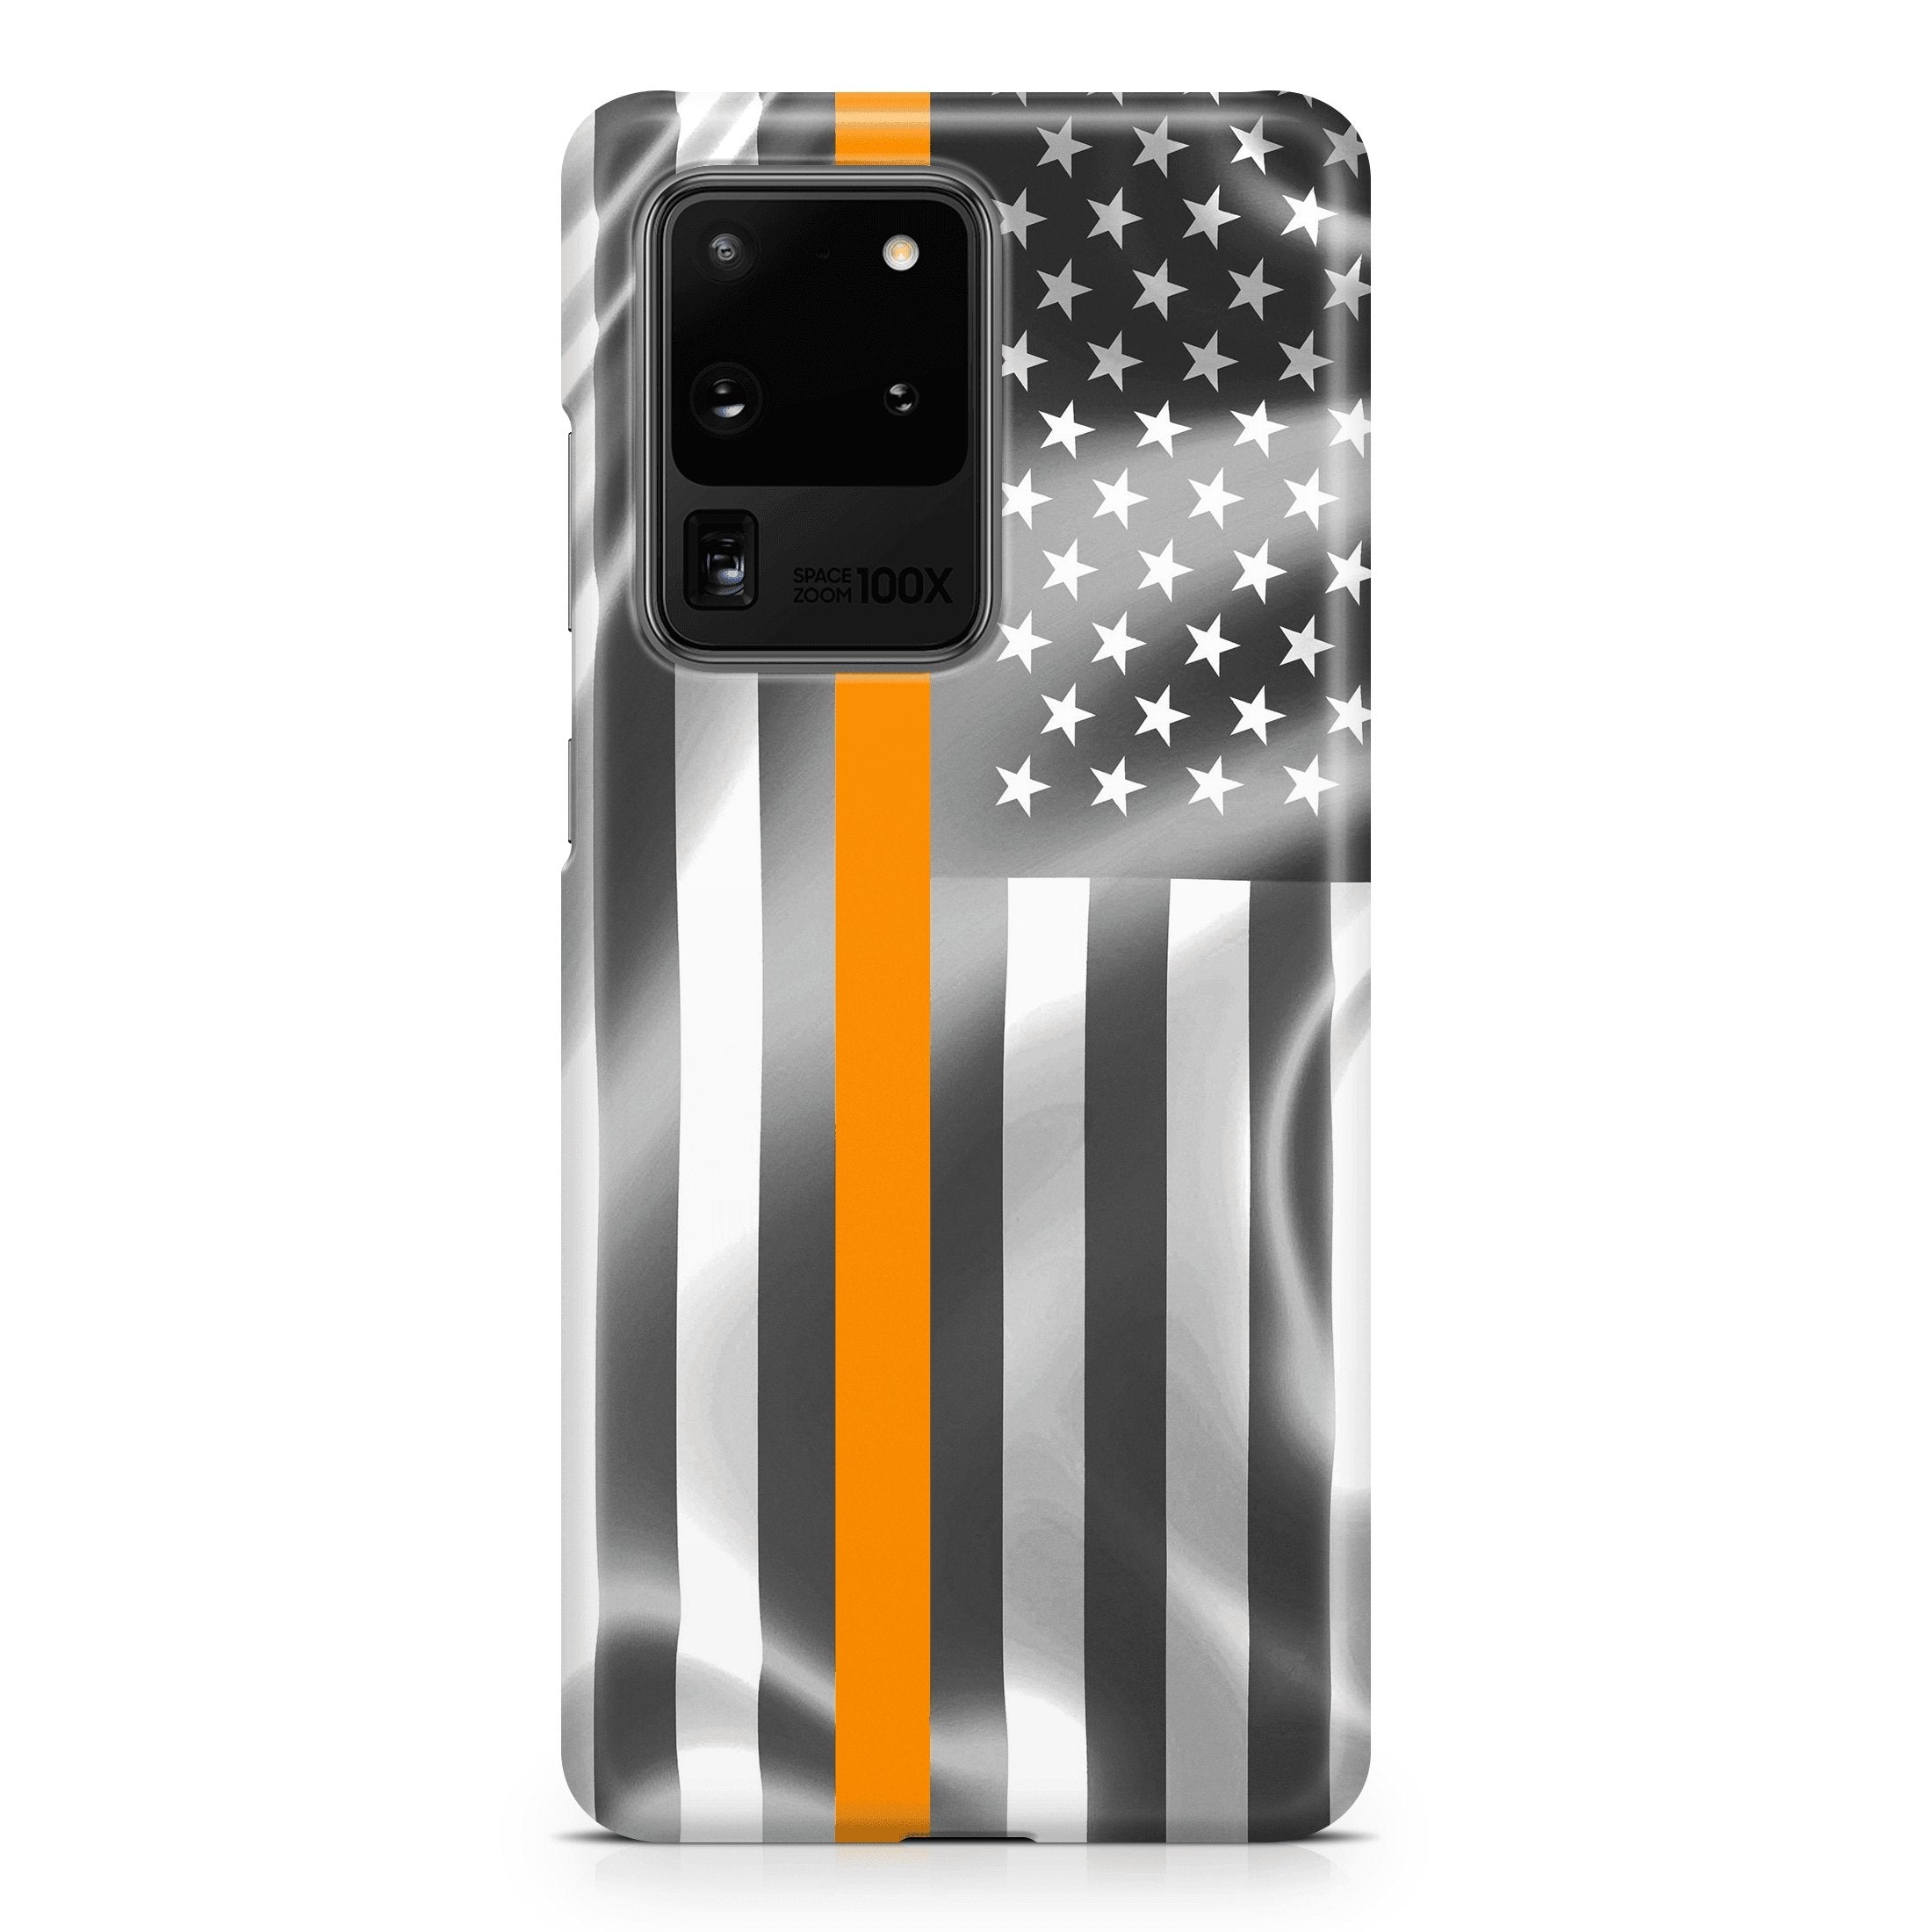 Thin Orange Line - Samsung phone case designs by CaseSwagger